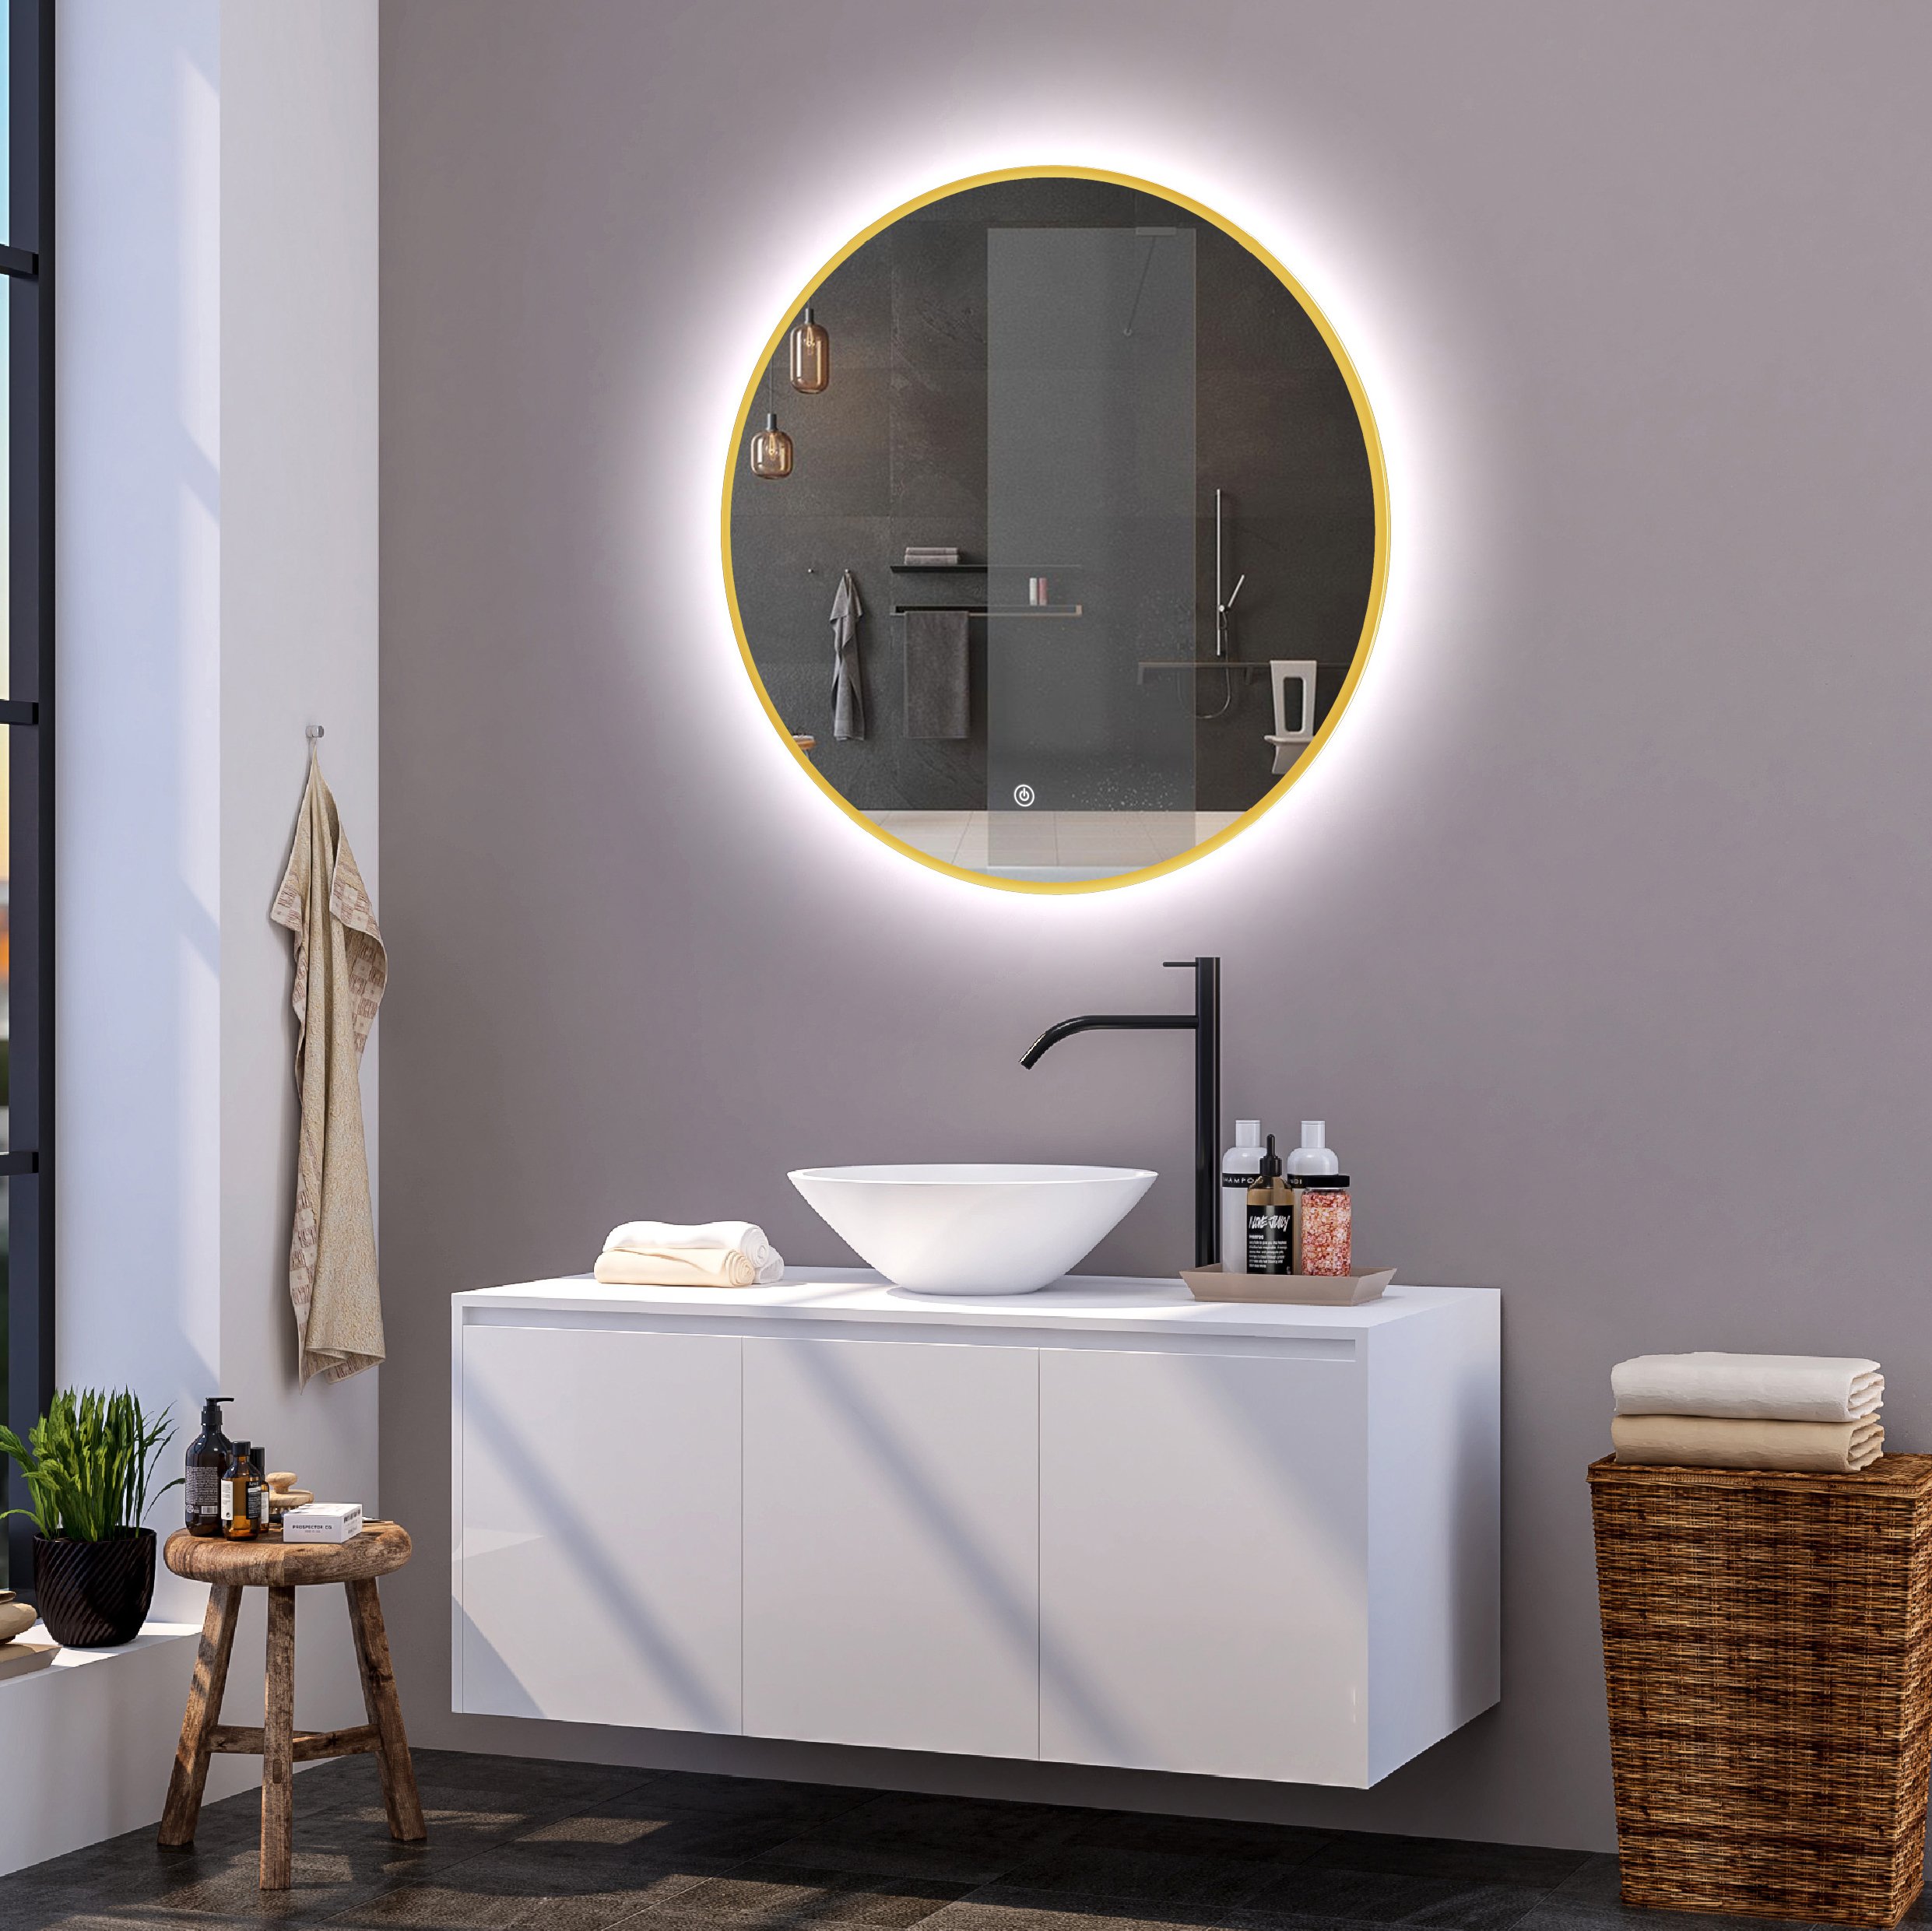 Ronde badkamerspiegel Mauri goud met verwarming, LED verlichting en touch sensor - Voordelig Design